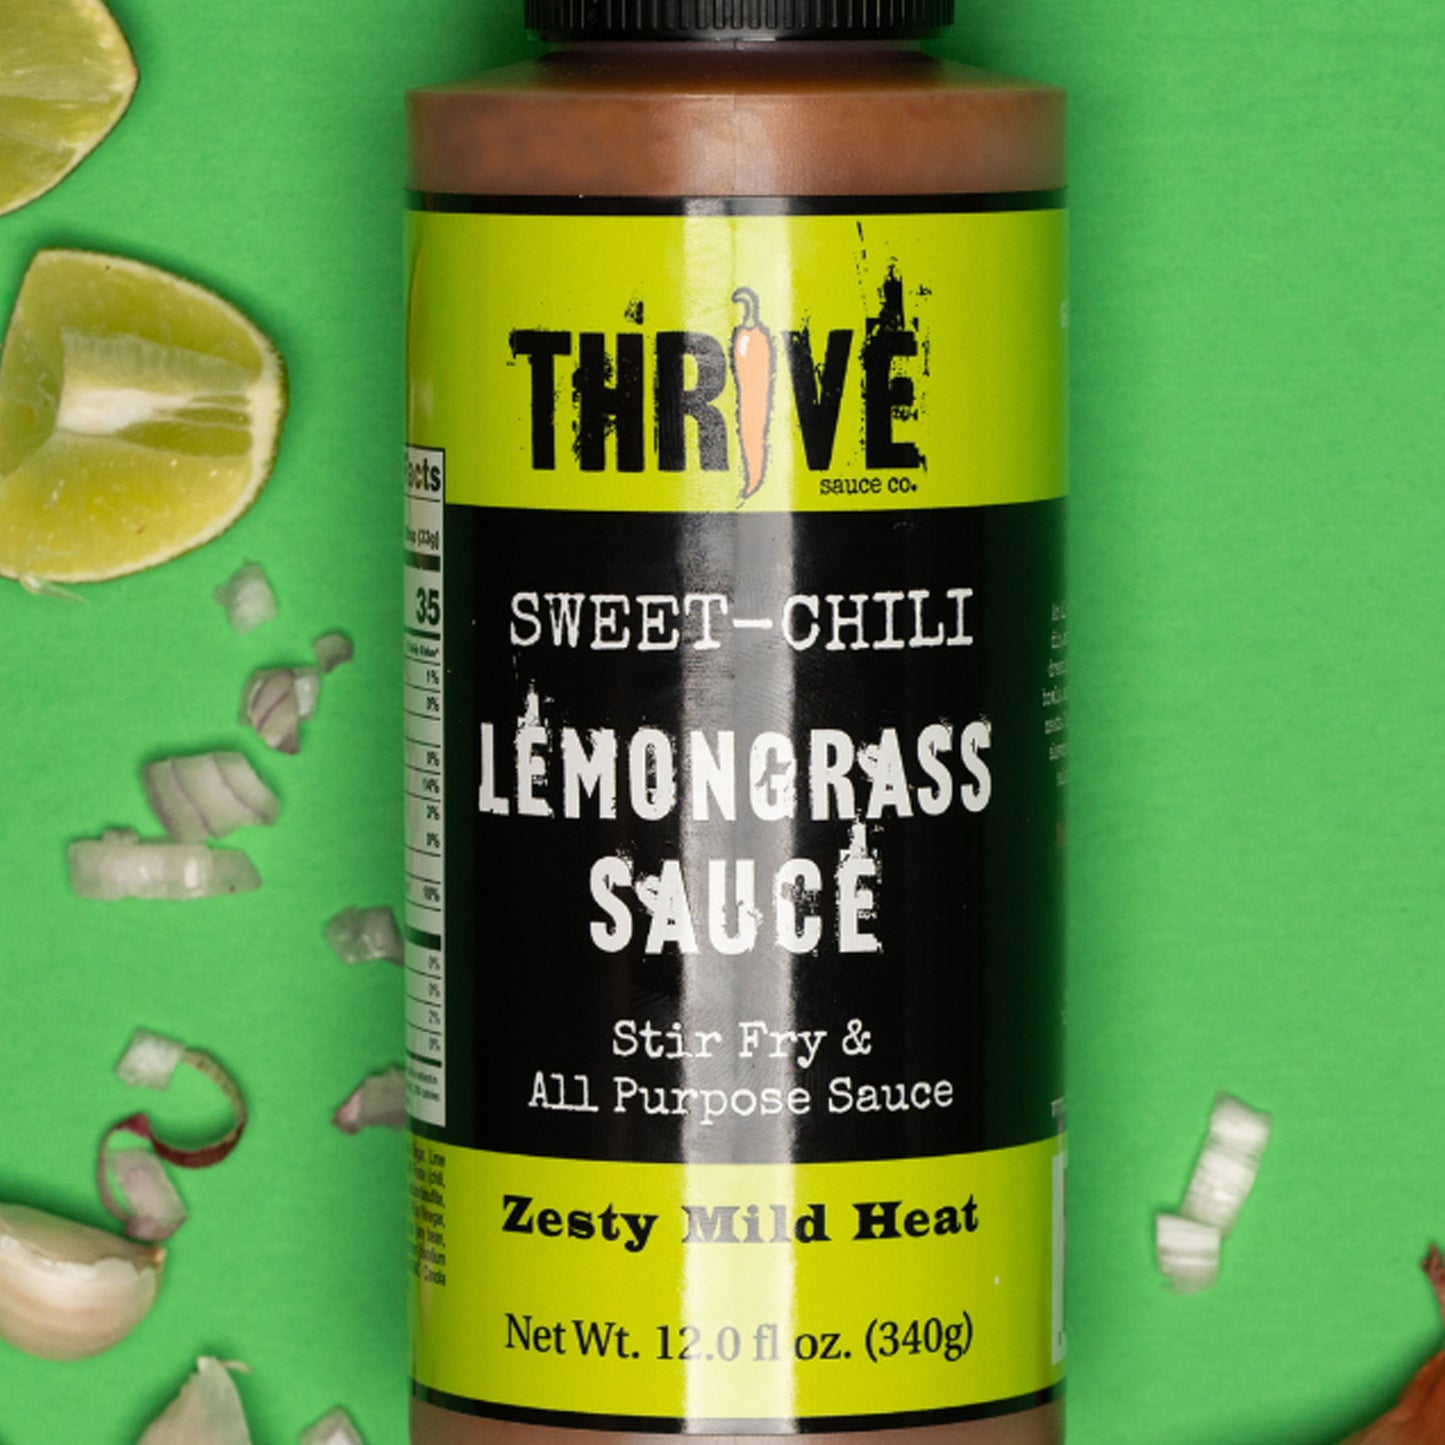 Sweet Chili Lemongrass Sauce